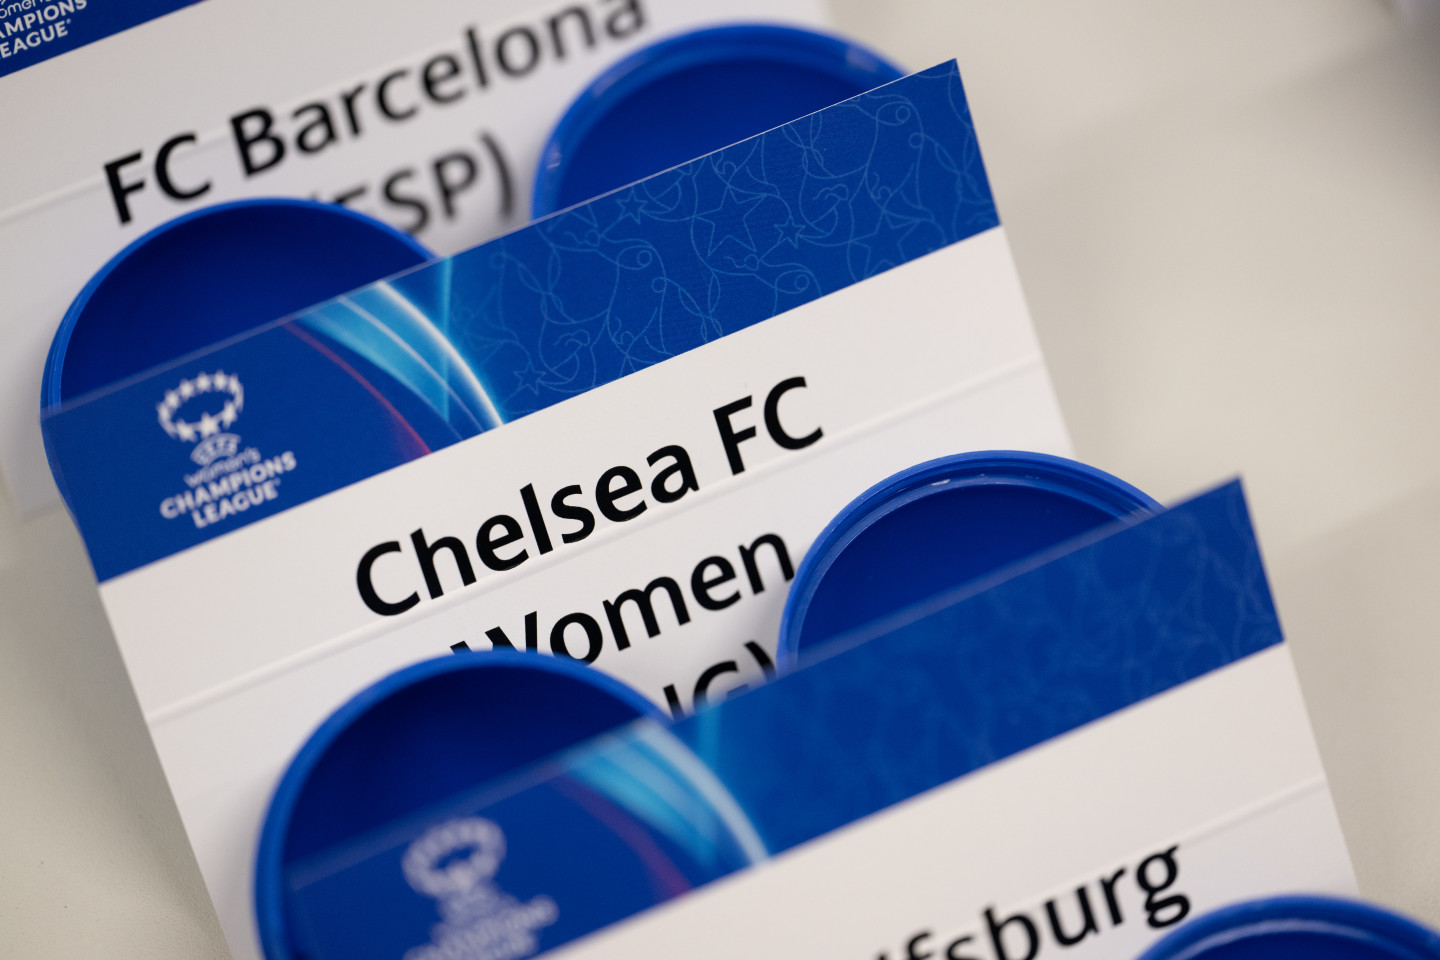 2018/19 UEFA Women's Champions League qualifying round fixtures